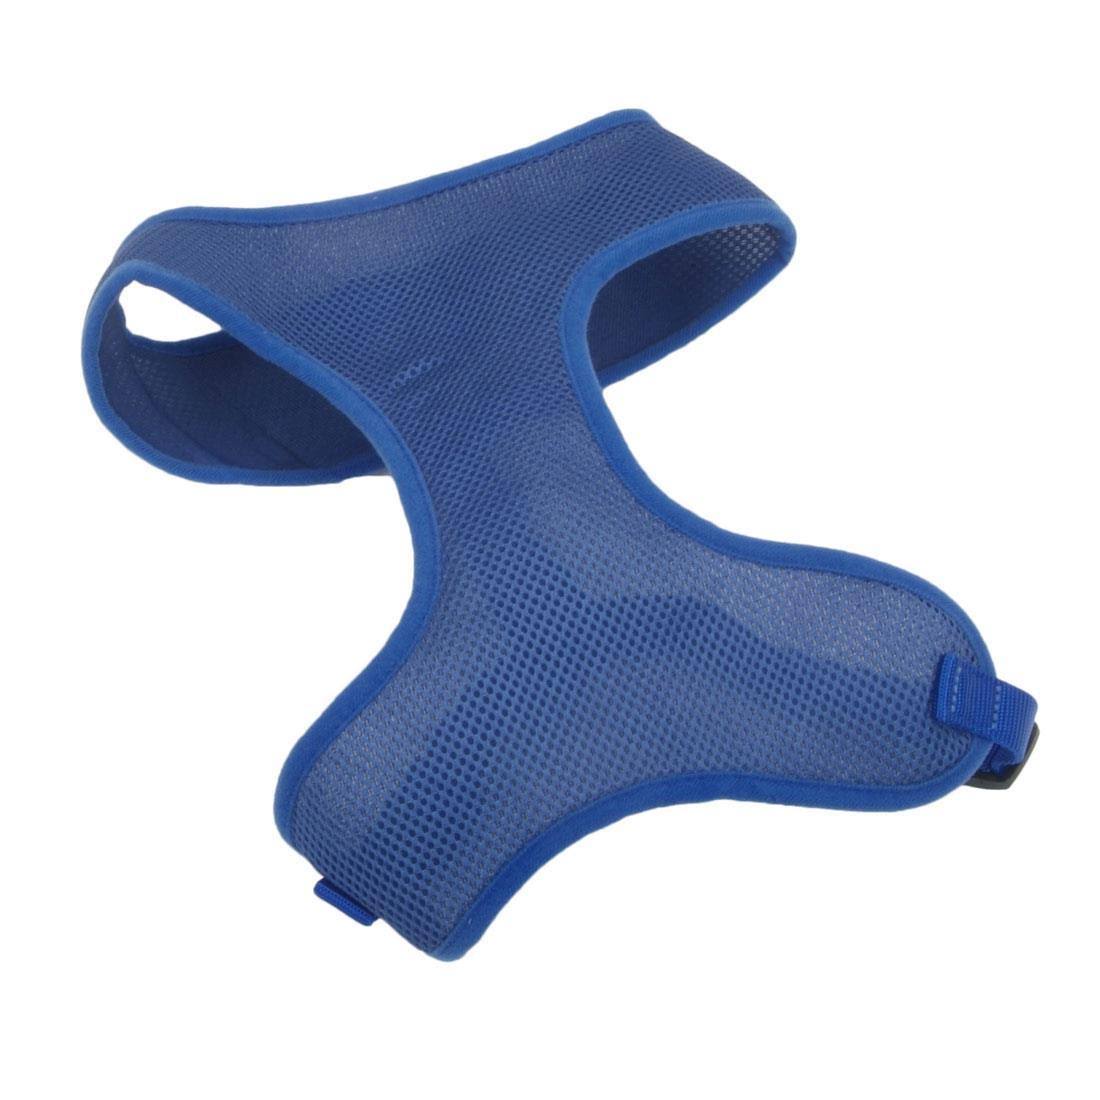 Dog Supplies 6913 Comfort Harness - Medium, Blue, 3/4"